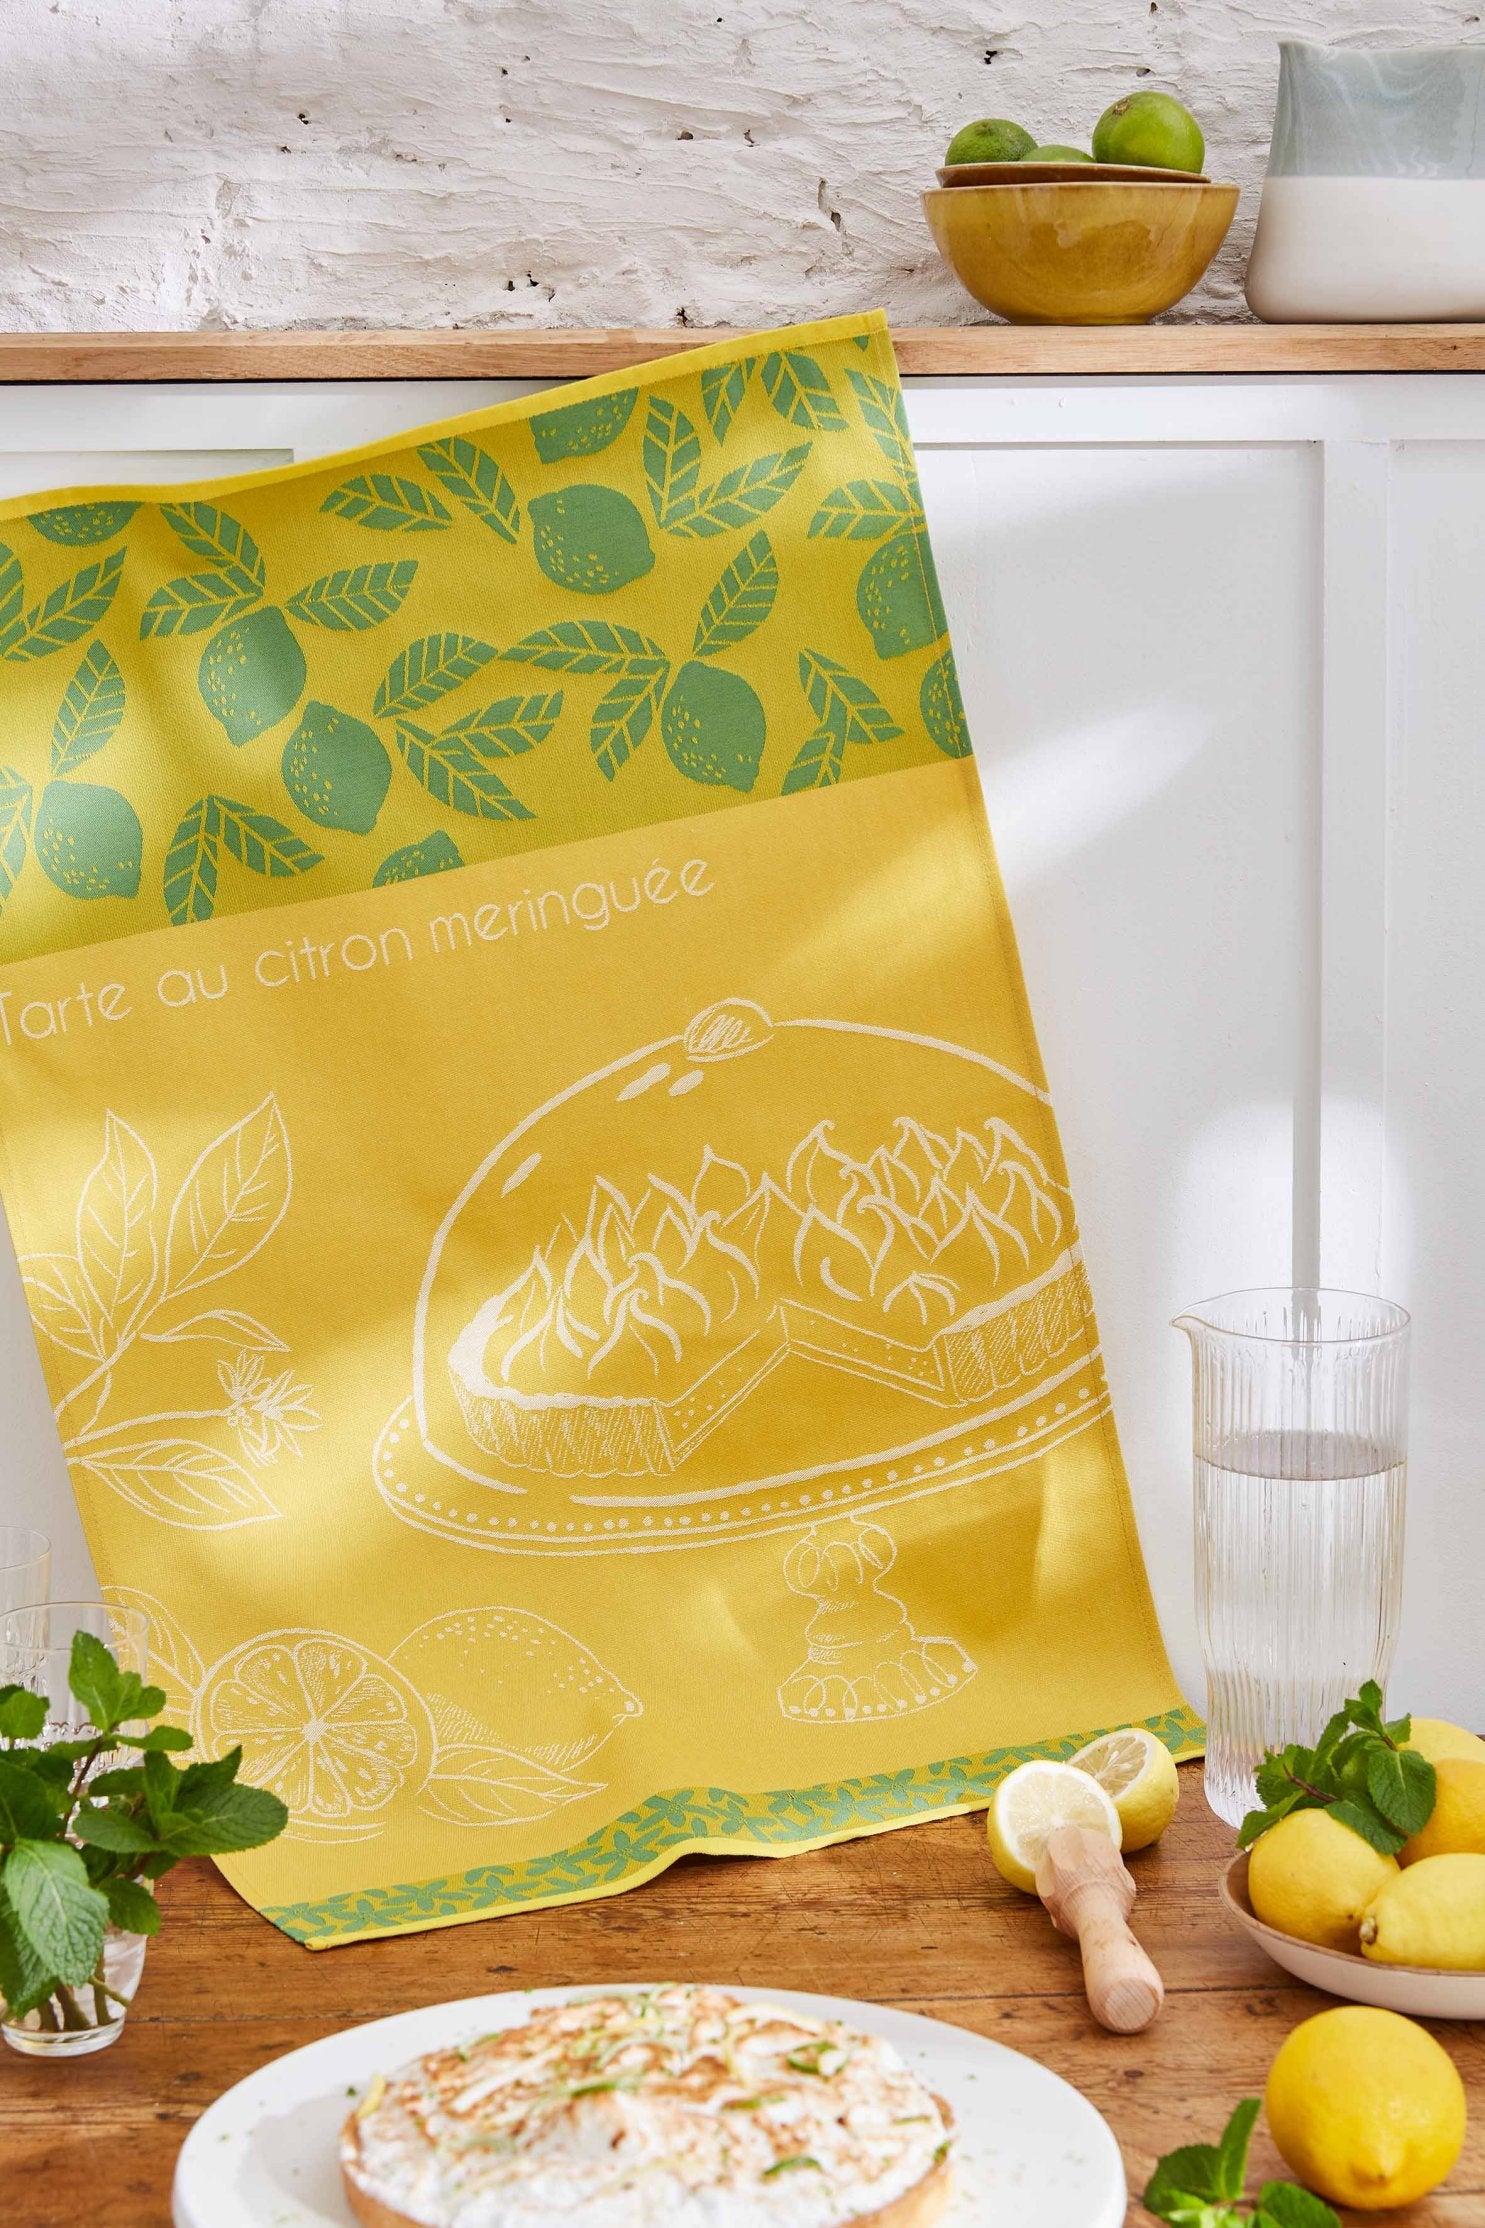 Coucke "Tarte aux citron", Woven cotton tea towel. Designed in France.